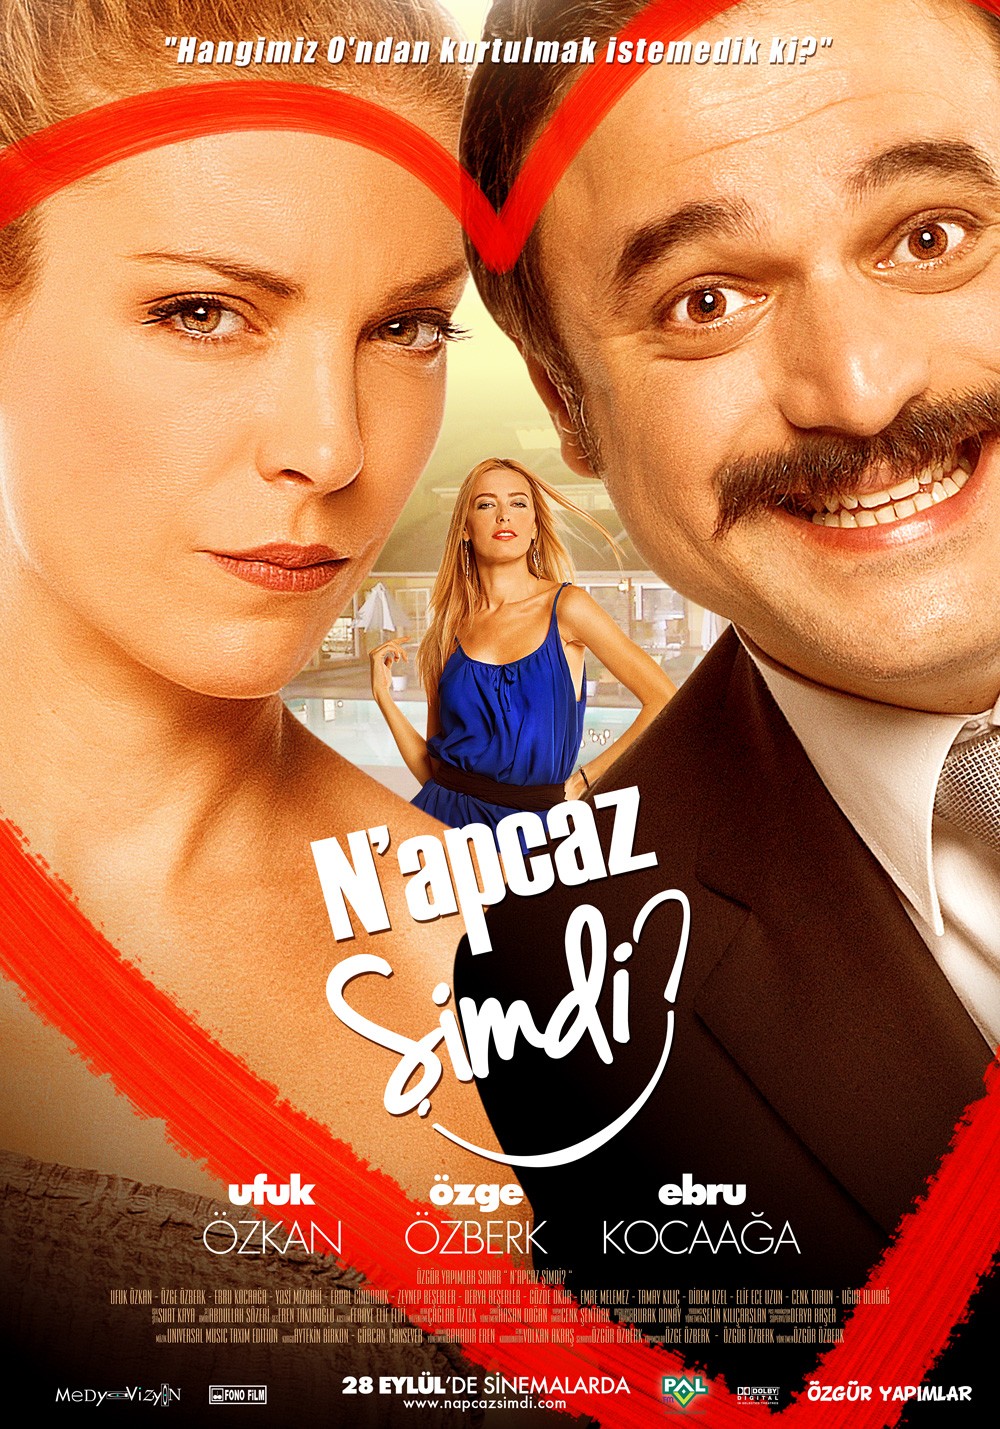 Extra Large Movie Poster Image for N'apcaz simdi? 